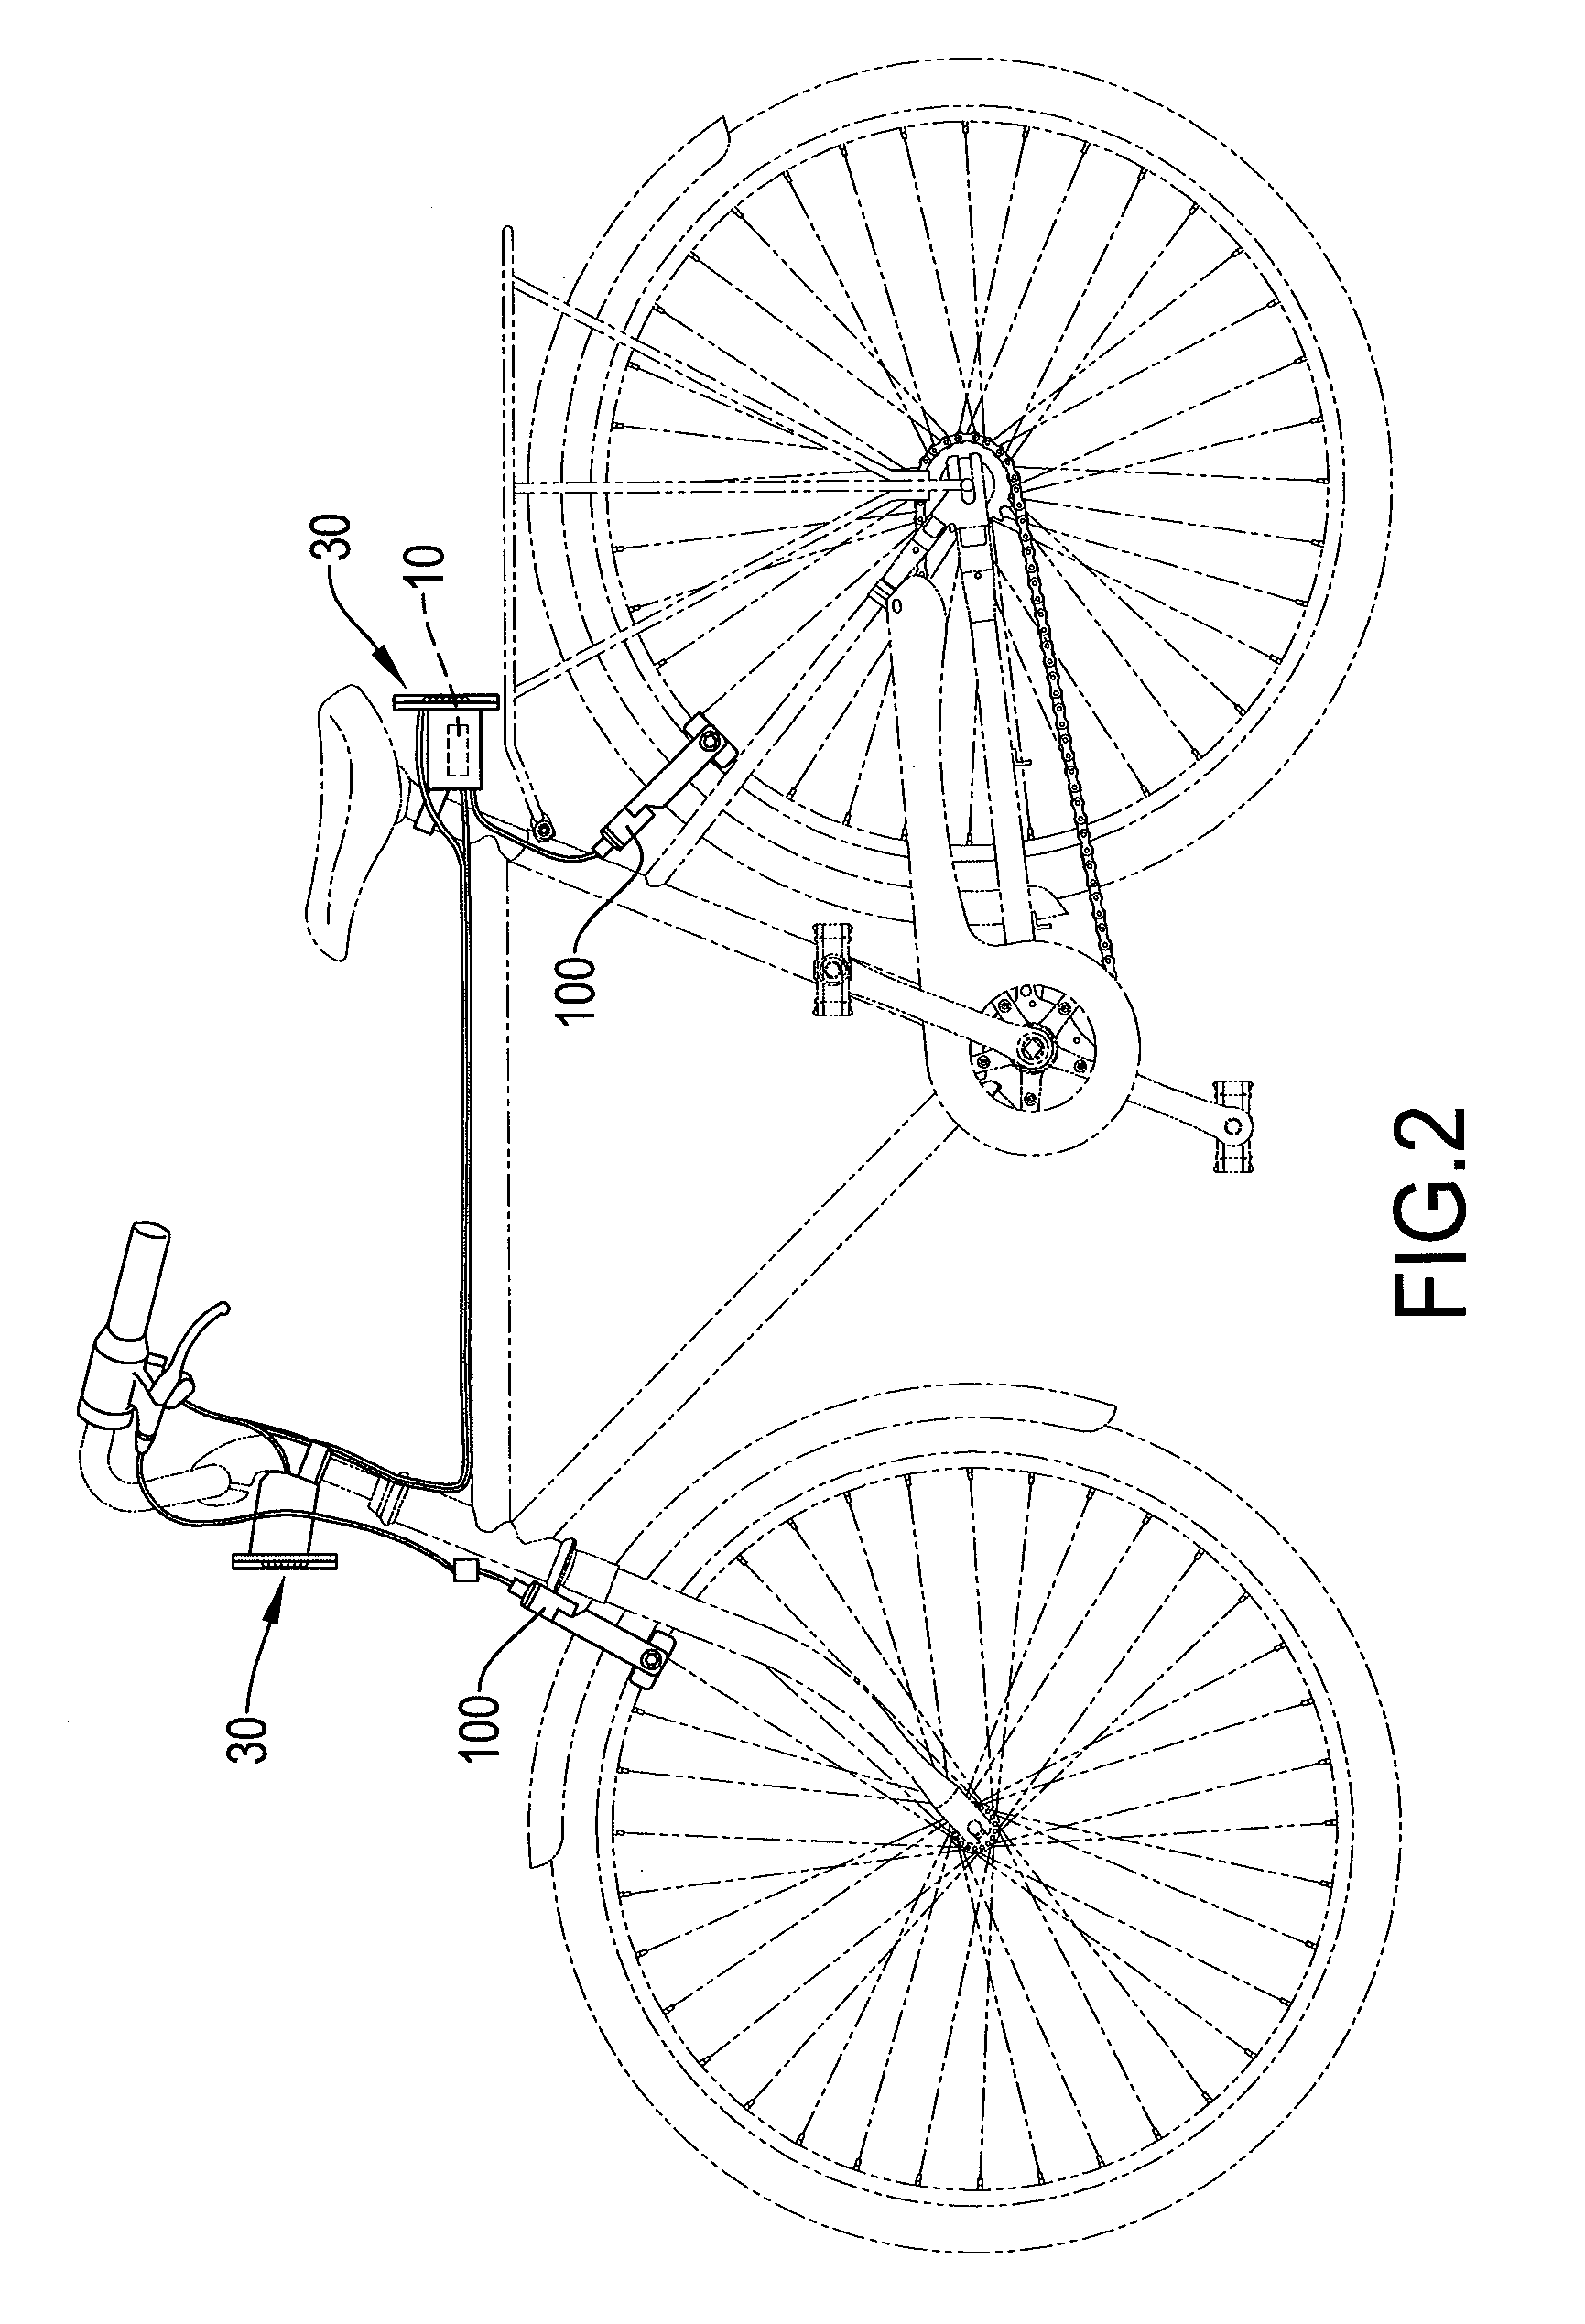 Bicycle alarm device